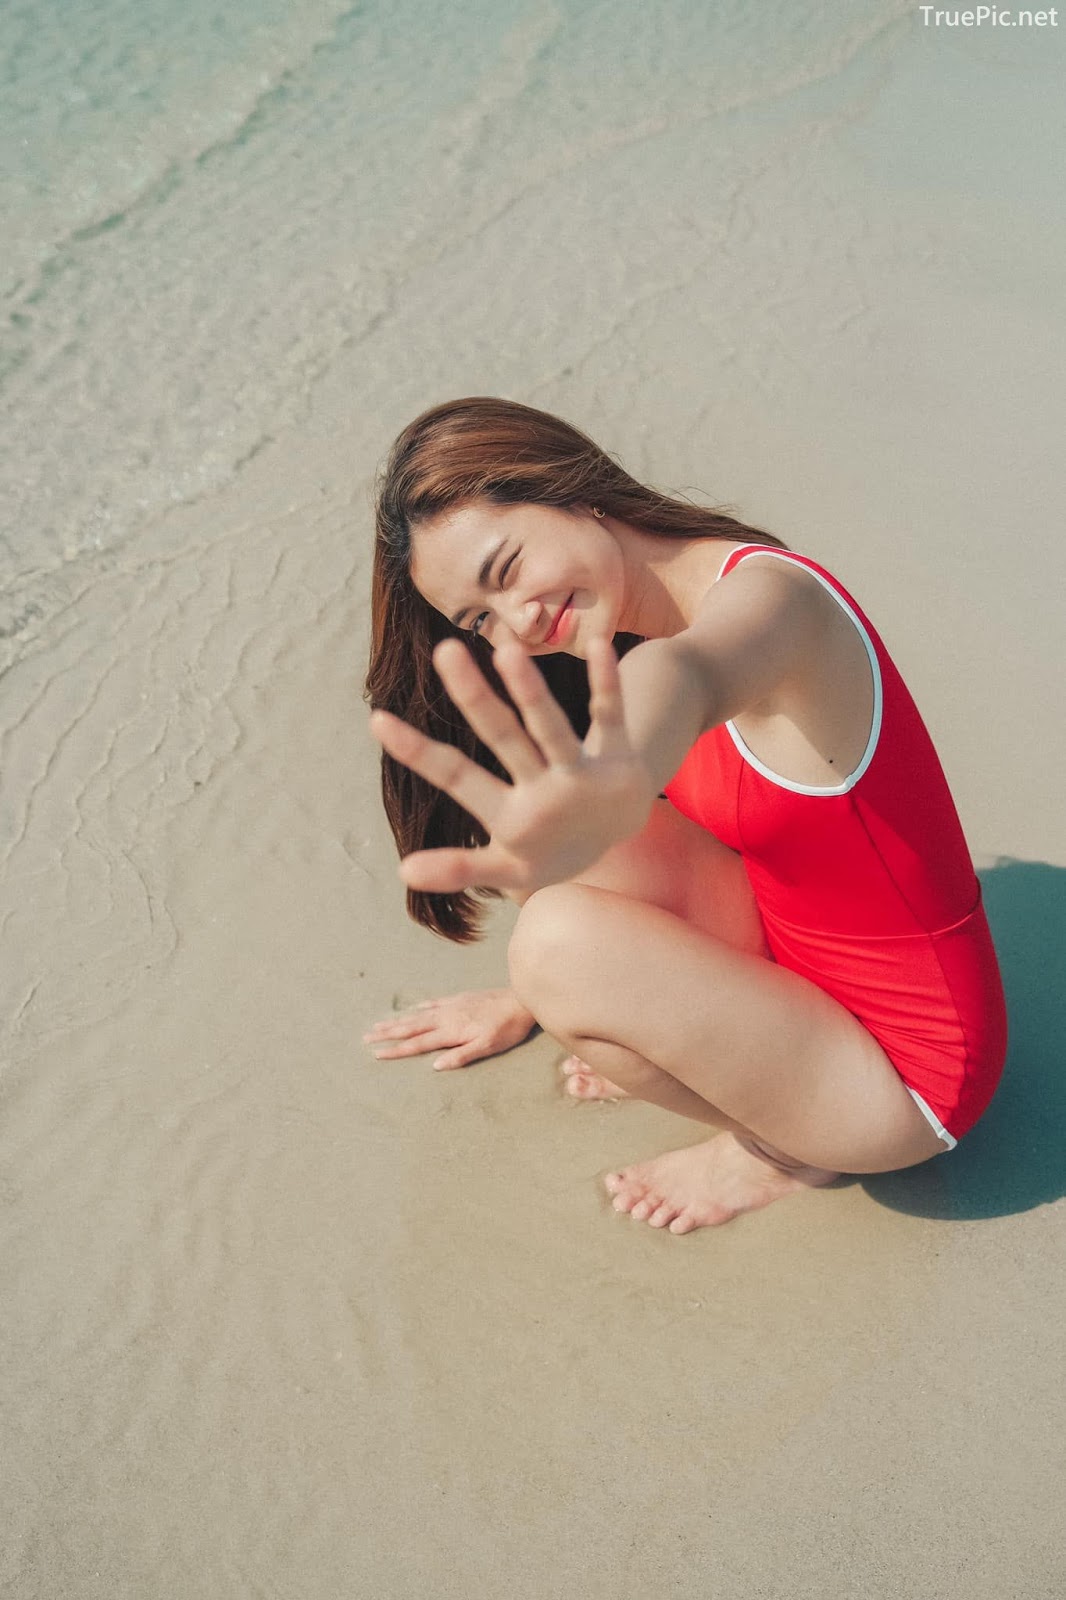 Miss Teen Thailand - Kanyarat Ruangrung - The Red Monokini On The Beach - TruePic.net - Picture 12